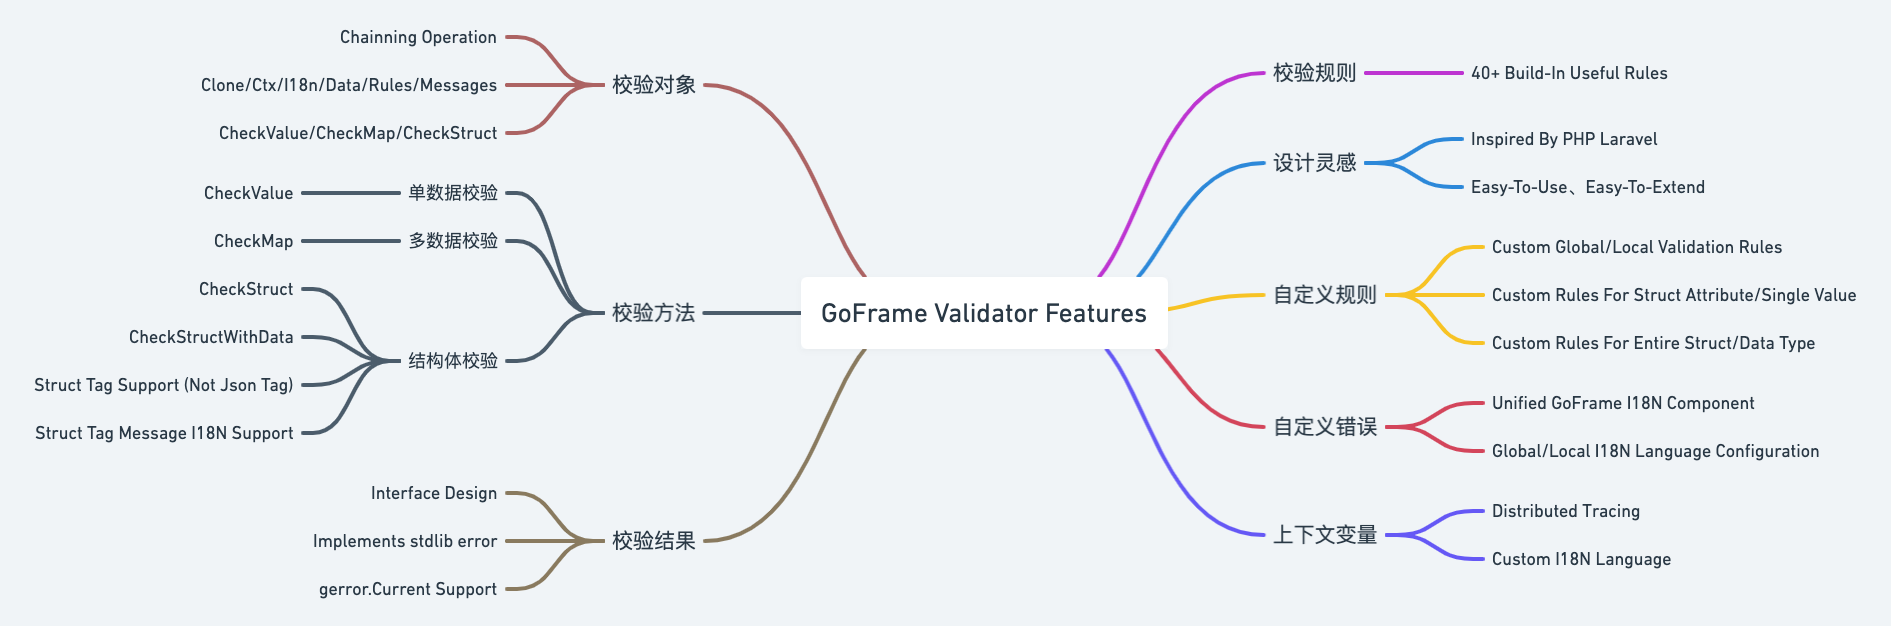 GoFrame Validator Features (1)